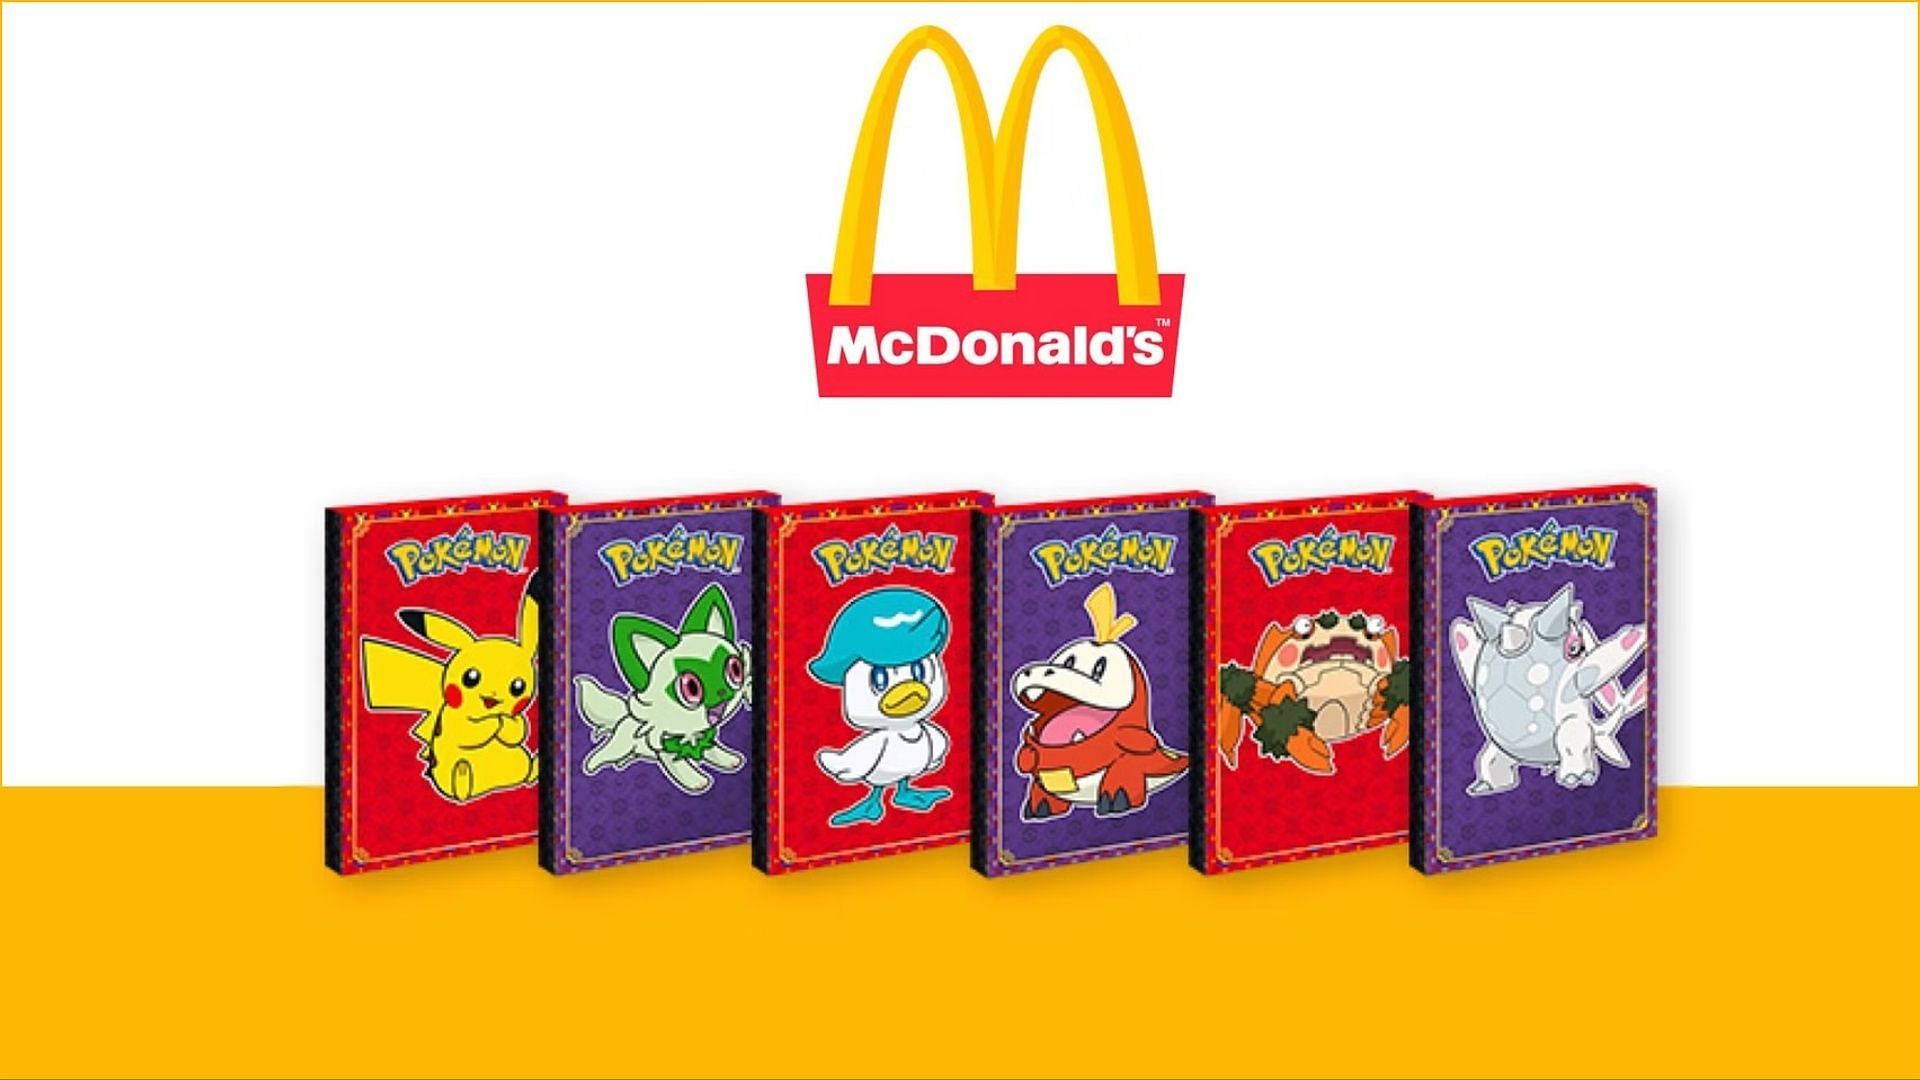 2023 McDonalds Pokemon Full Complete Set of 15 Cards - Match Battle TCG